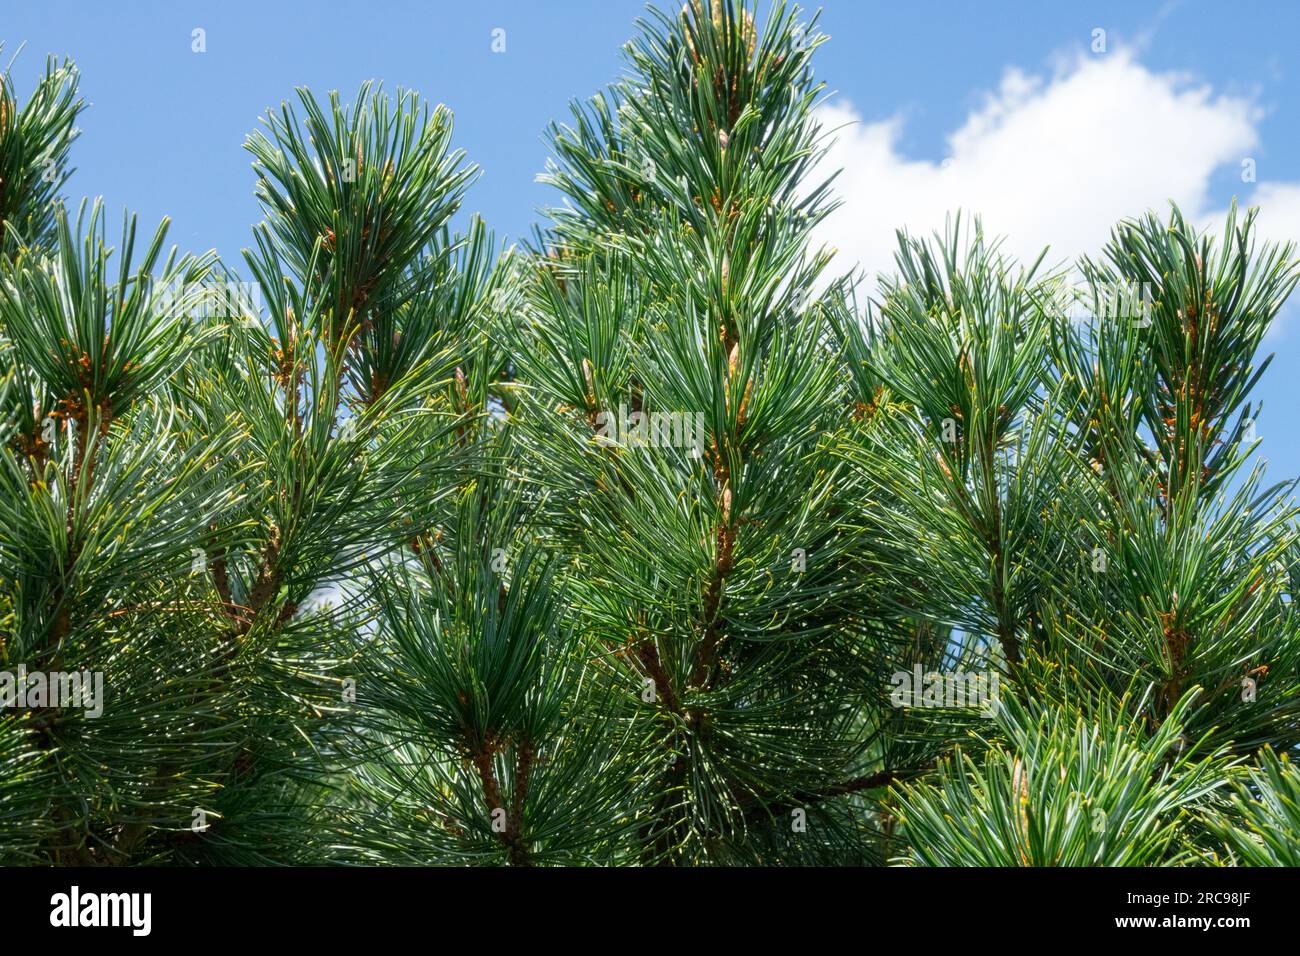 Dwarf Siberian Pine, Pinus pumila 'Dwarf Blue', Branches, Coniferous, Needles, Conifer, Growth, Twigs Stock Photo